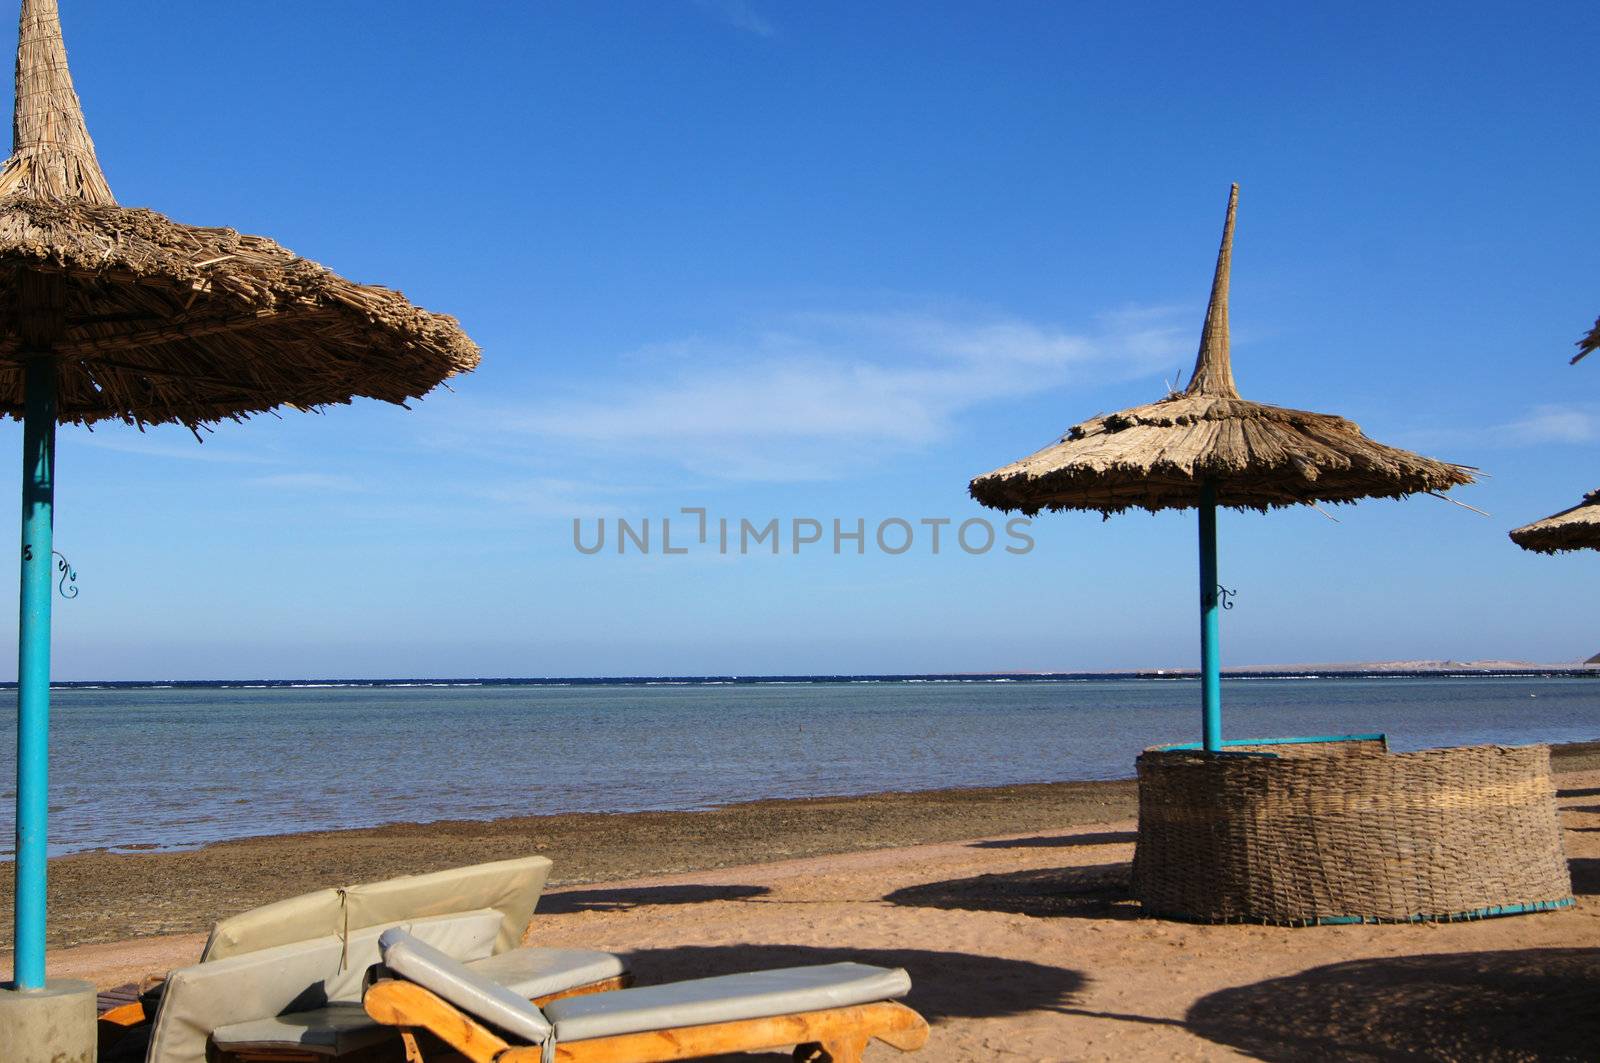 Sun umbrellas and beds on the sand beach                   